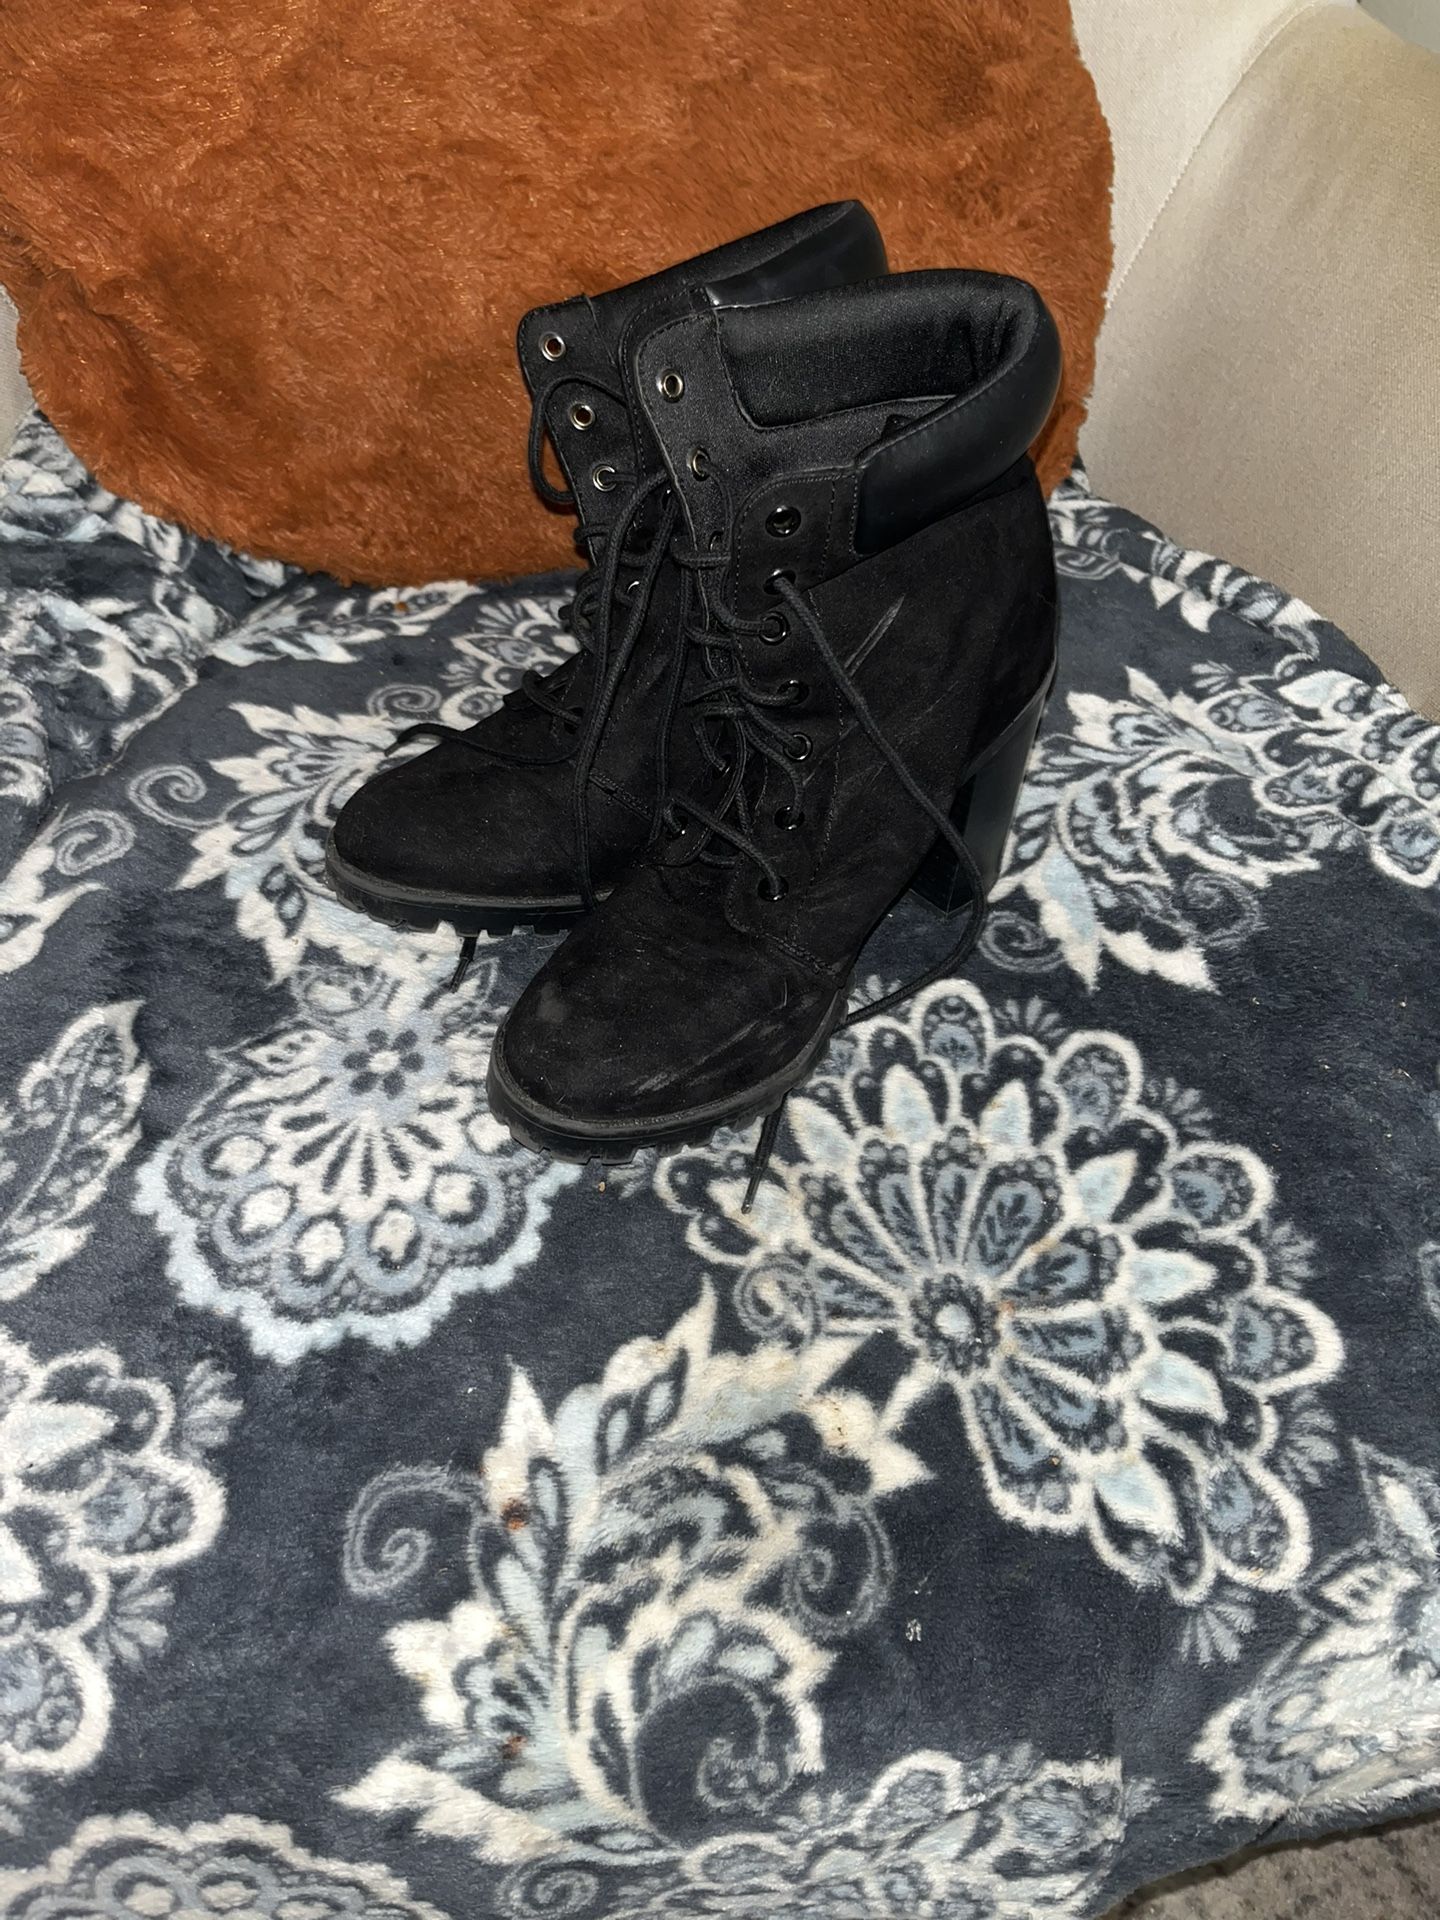 size 5.5 womens shoe/boot